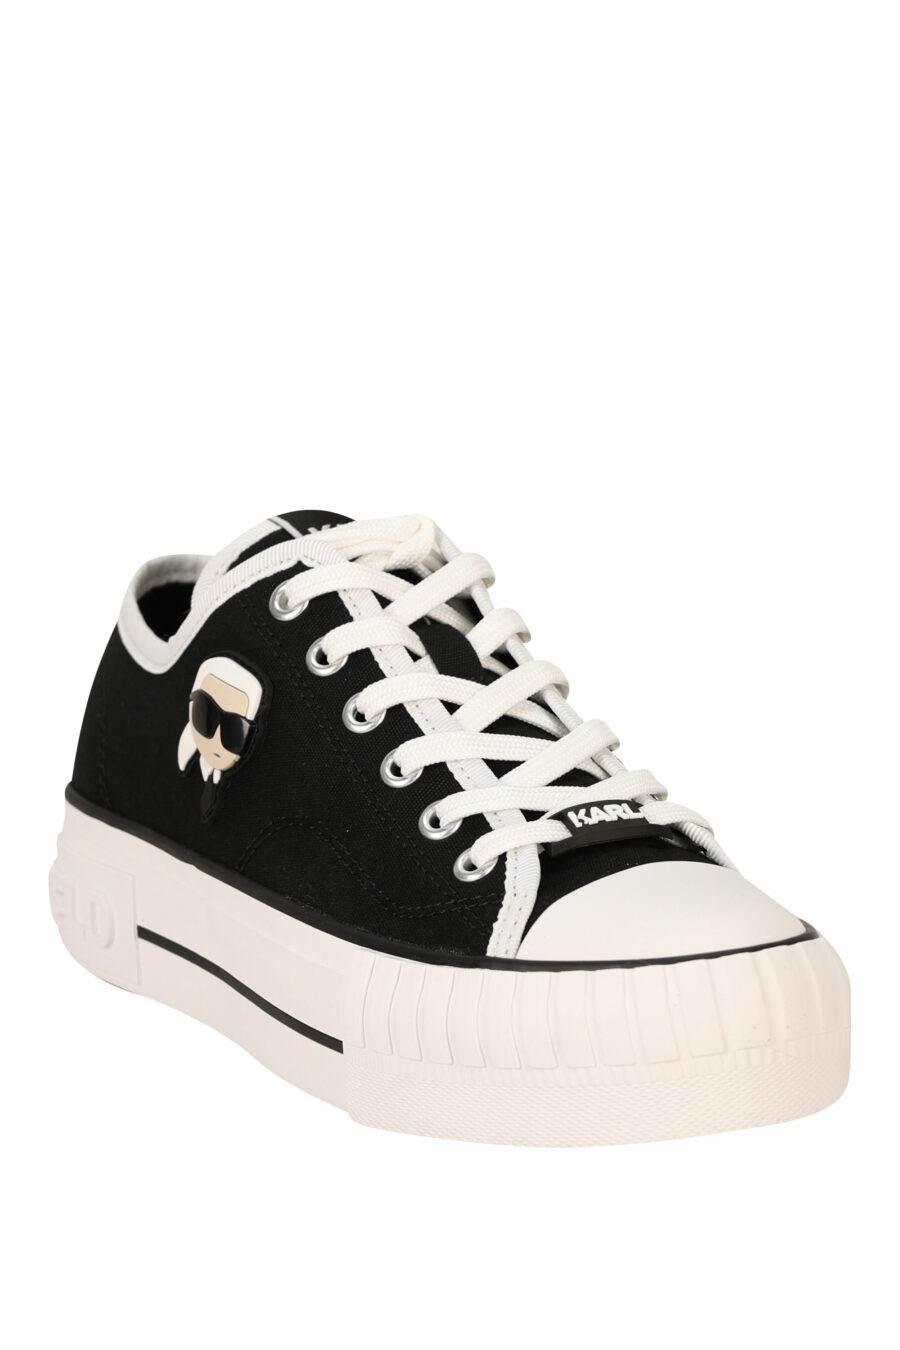 Sapatilhas pretas estilo converse com mini-logotipo "karl" em borracha - 5059529384554 1